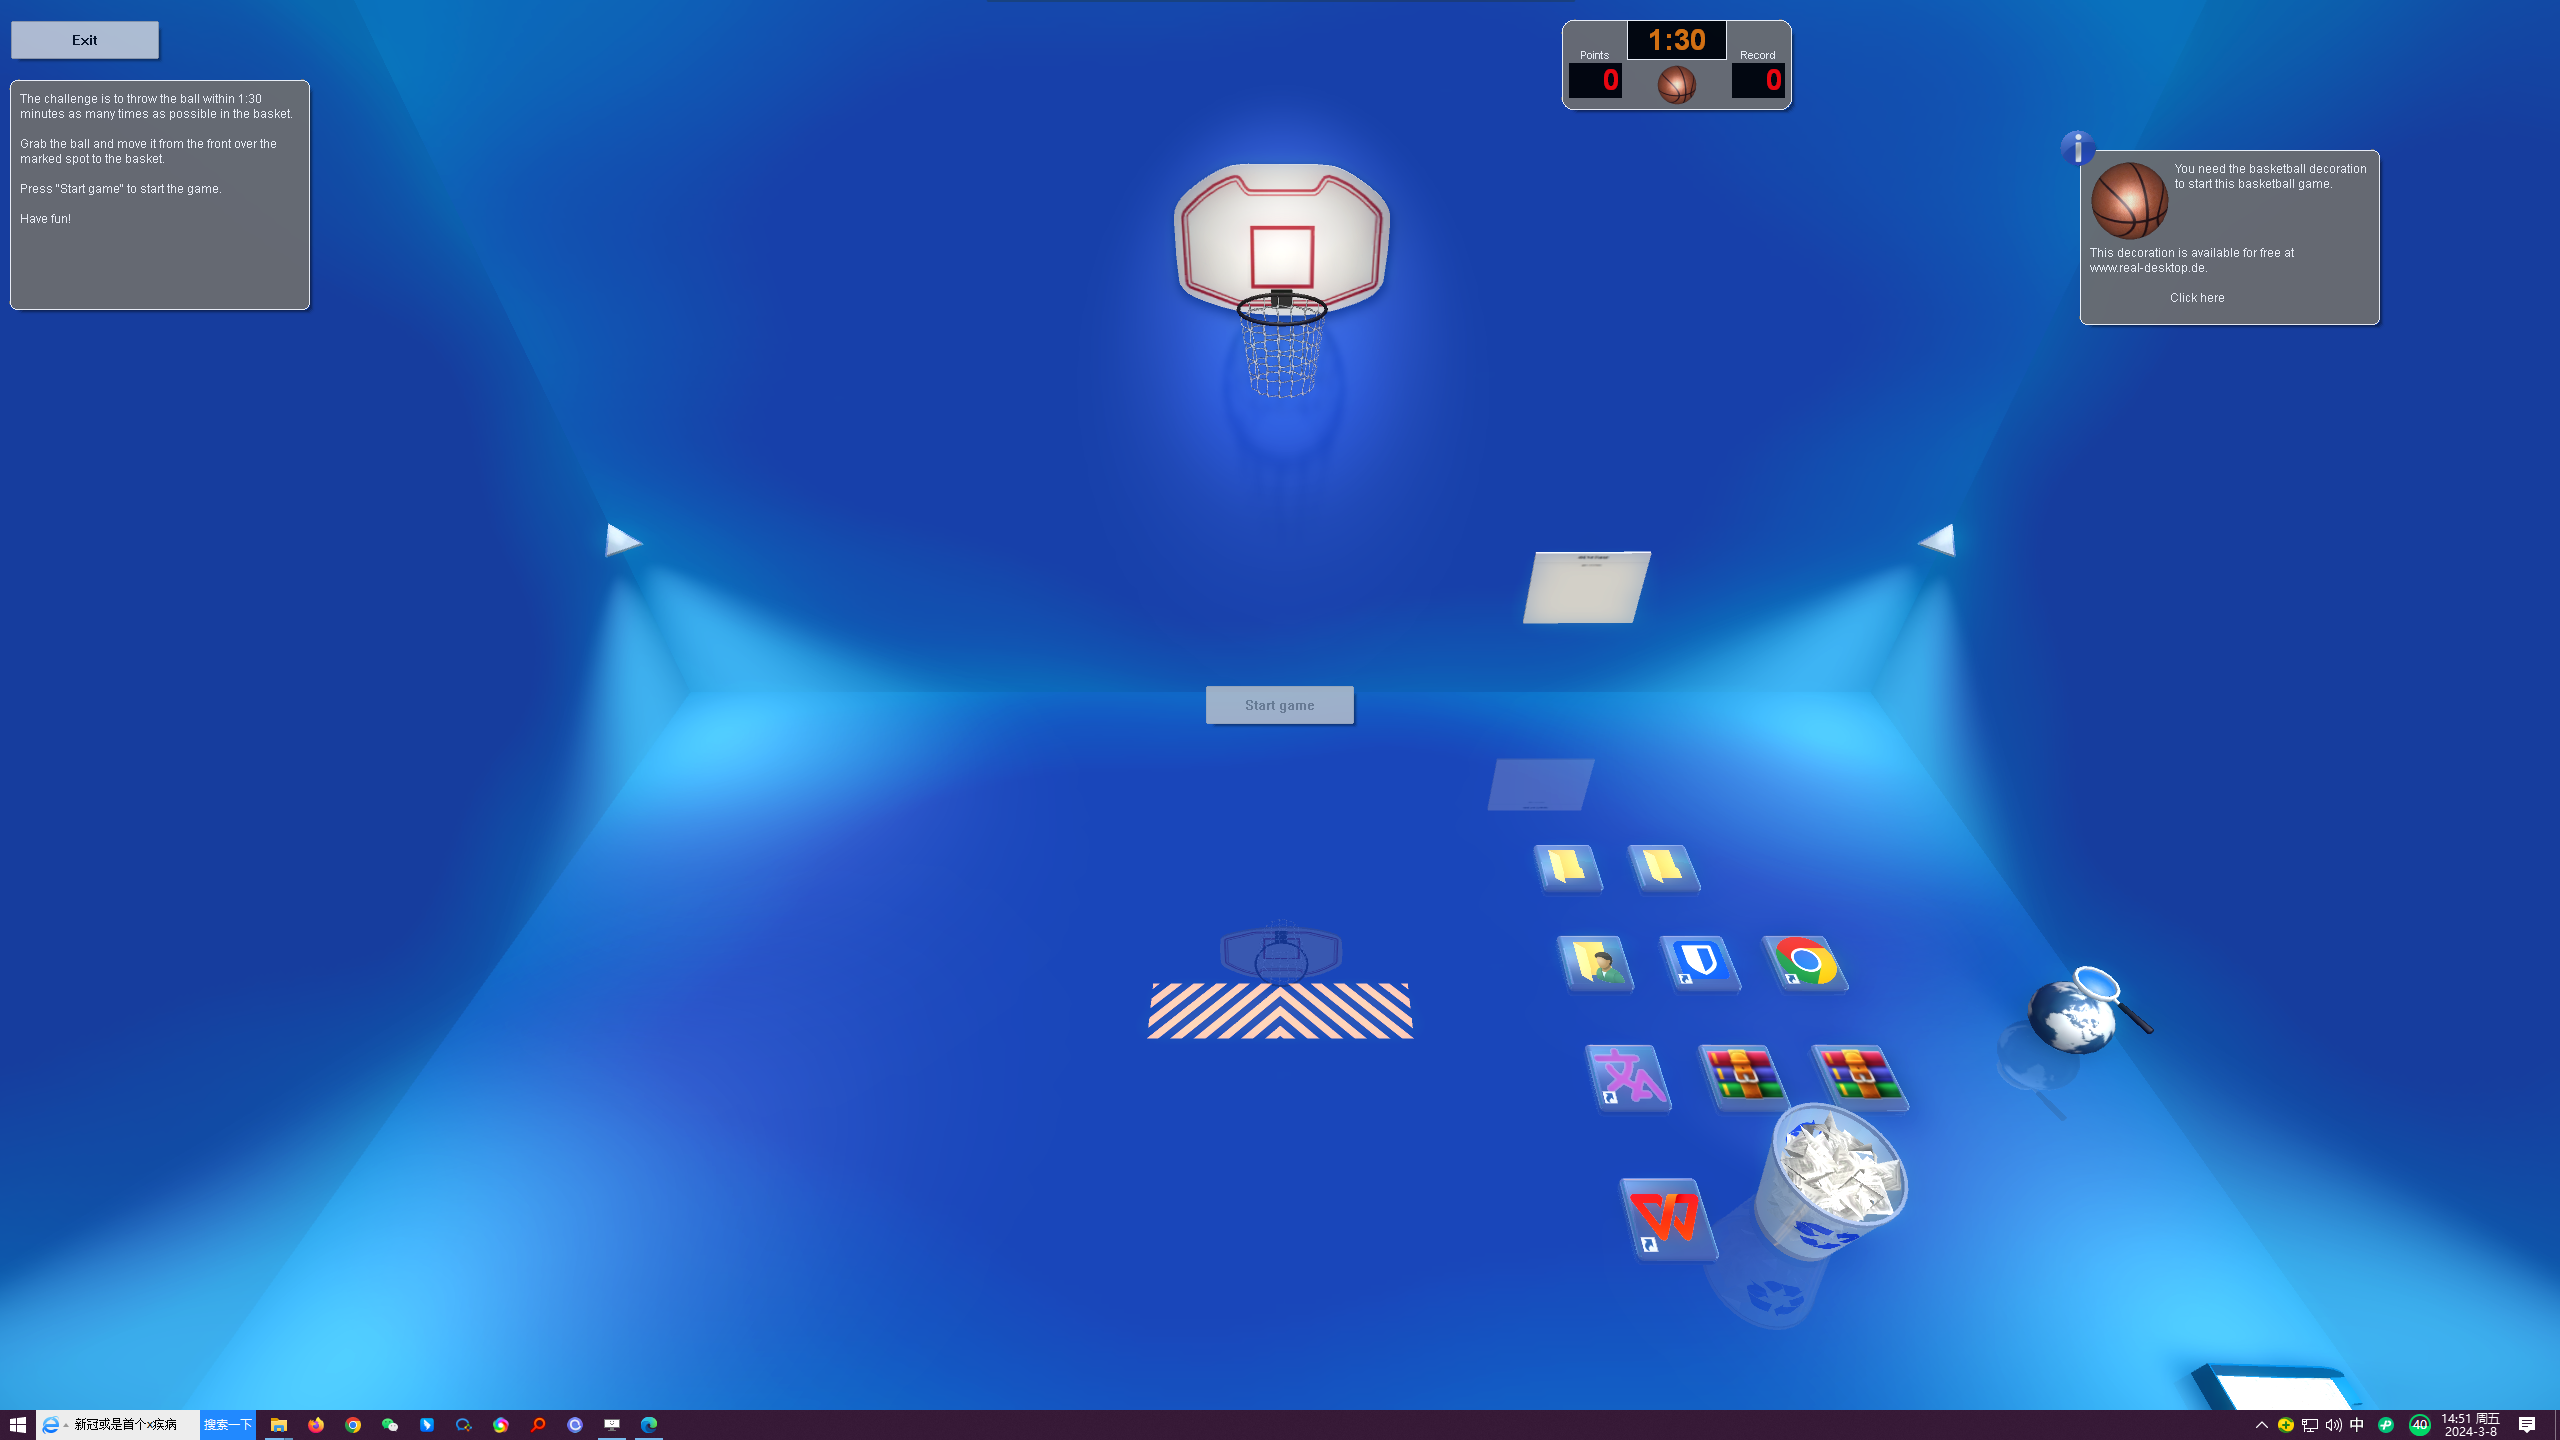 3D 桌面美化的工具软件 Real Desktop V2.08